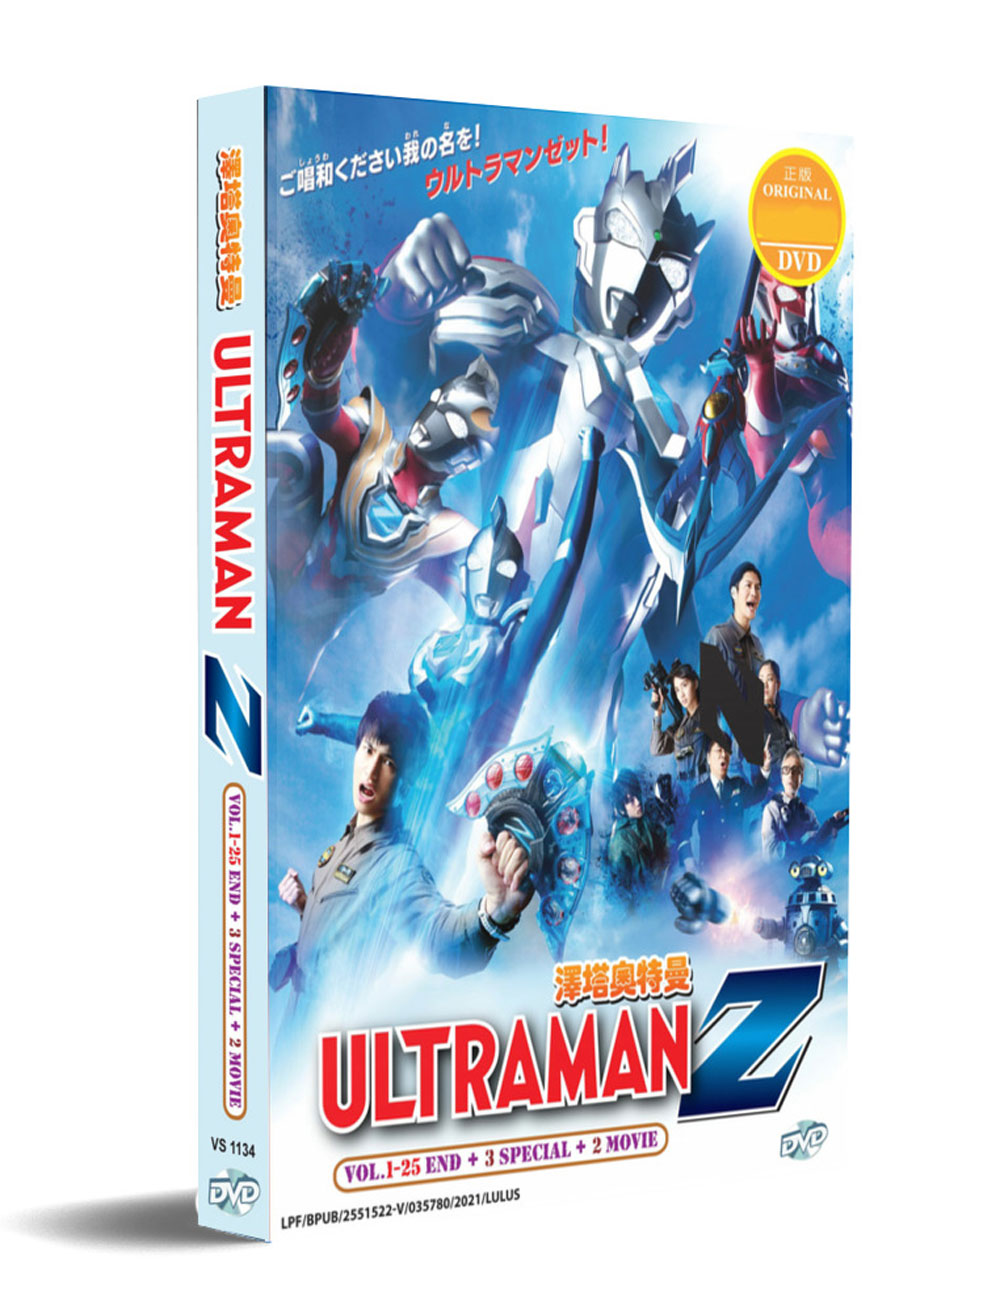 泽塔奥特曼 +3 Special +2 Movie (DVD) (2020) 动画